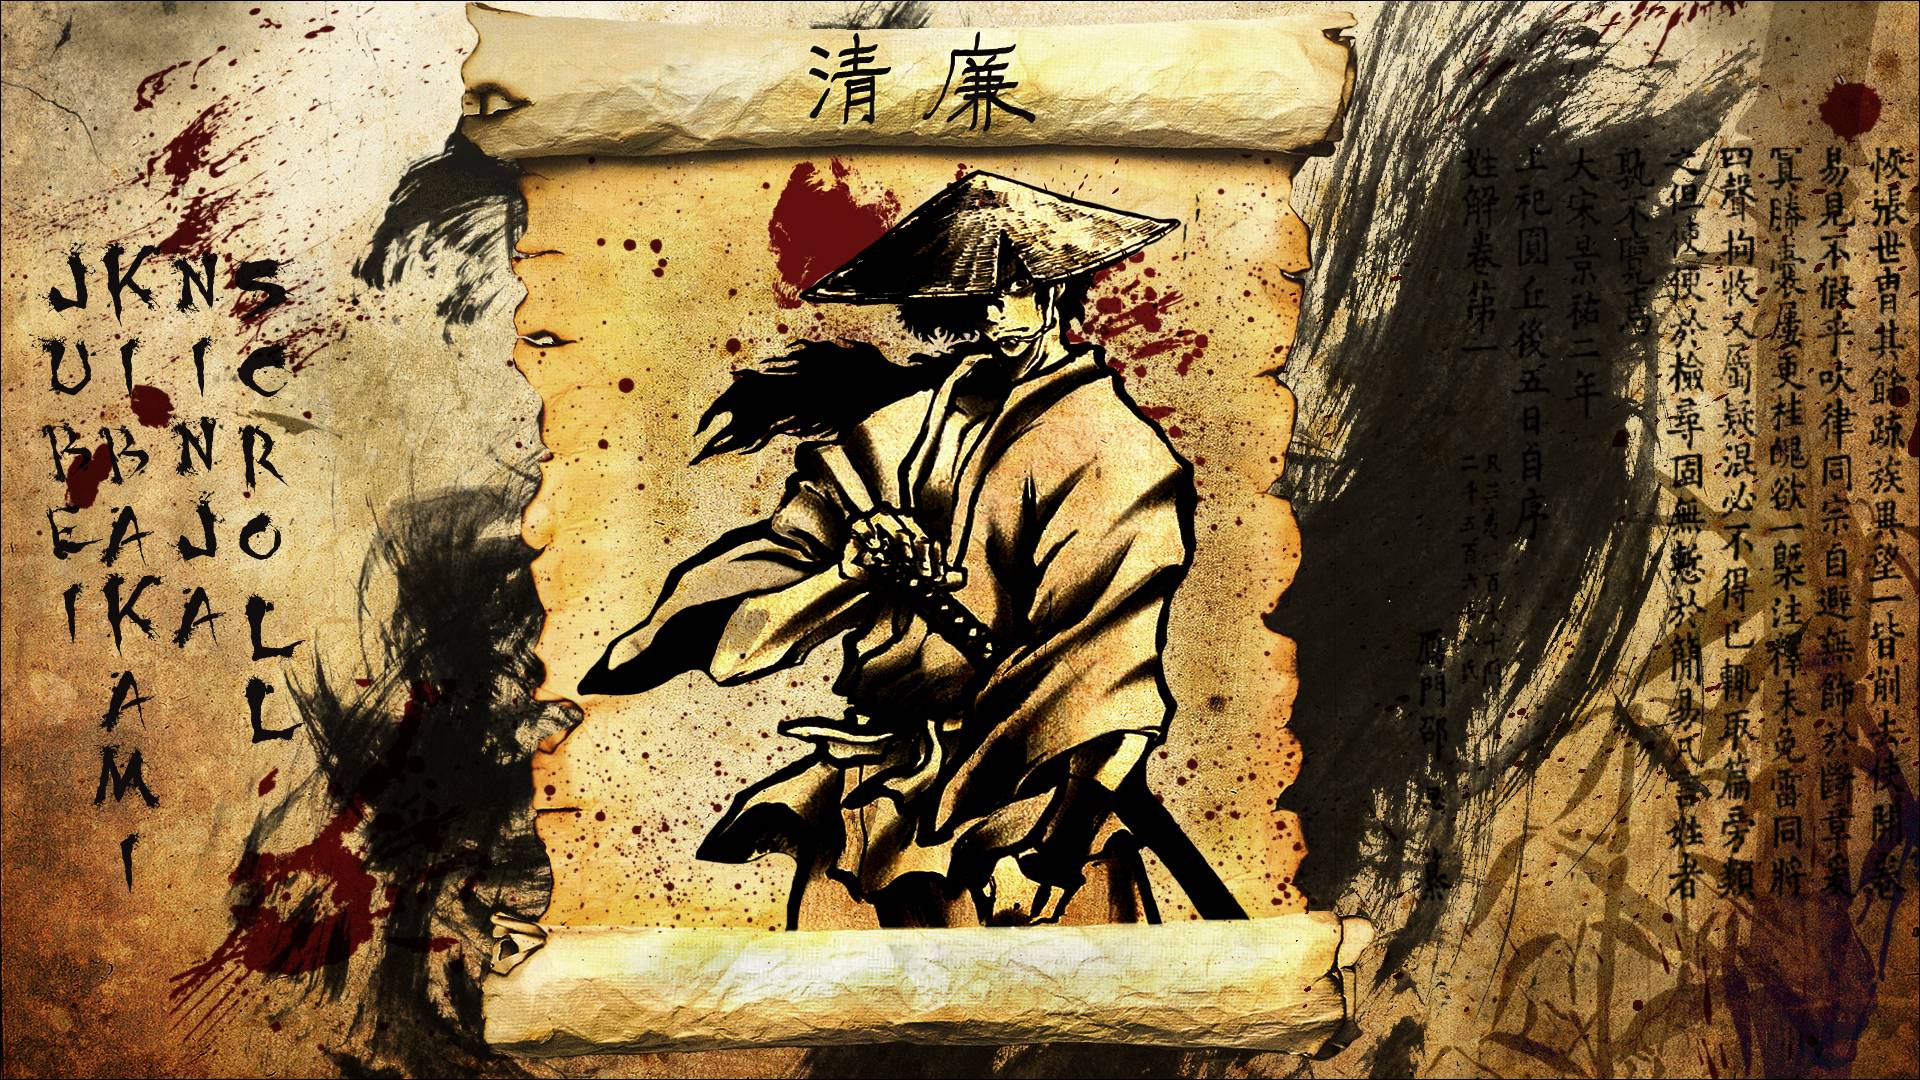 Ninja Scroll Hd Wallpapers